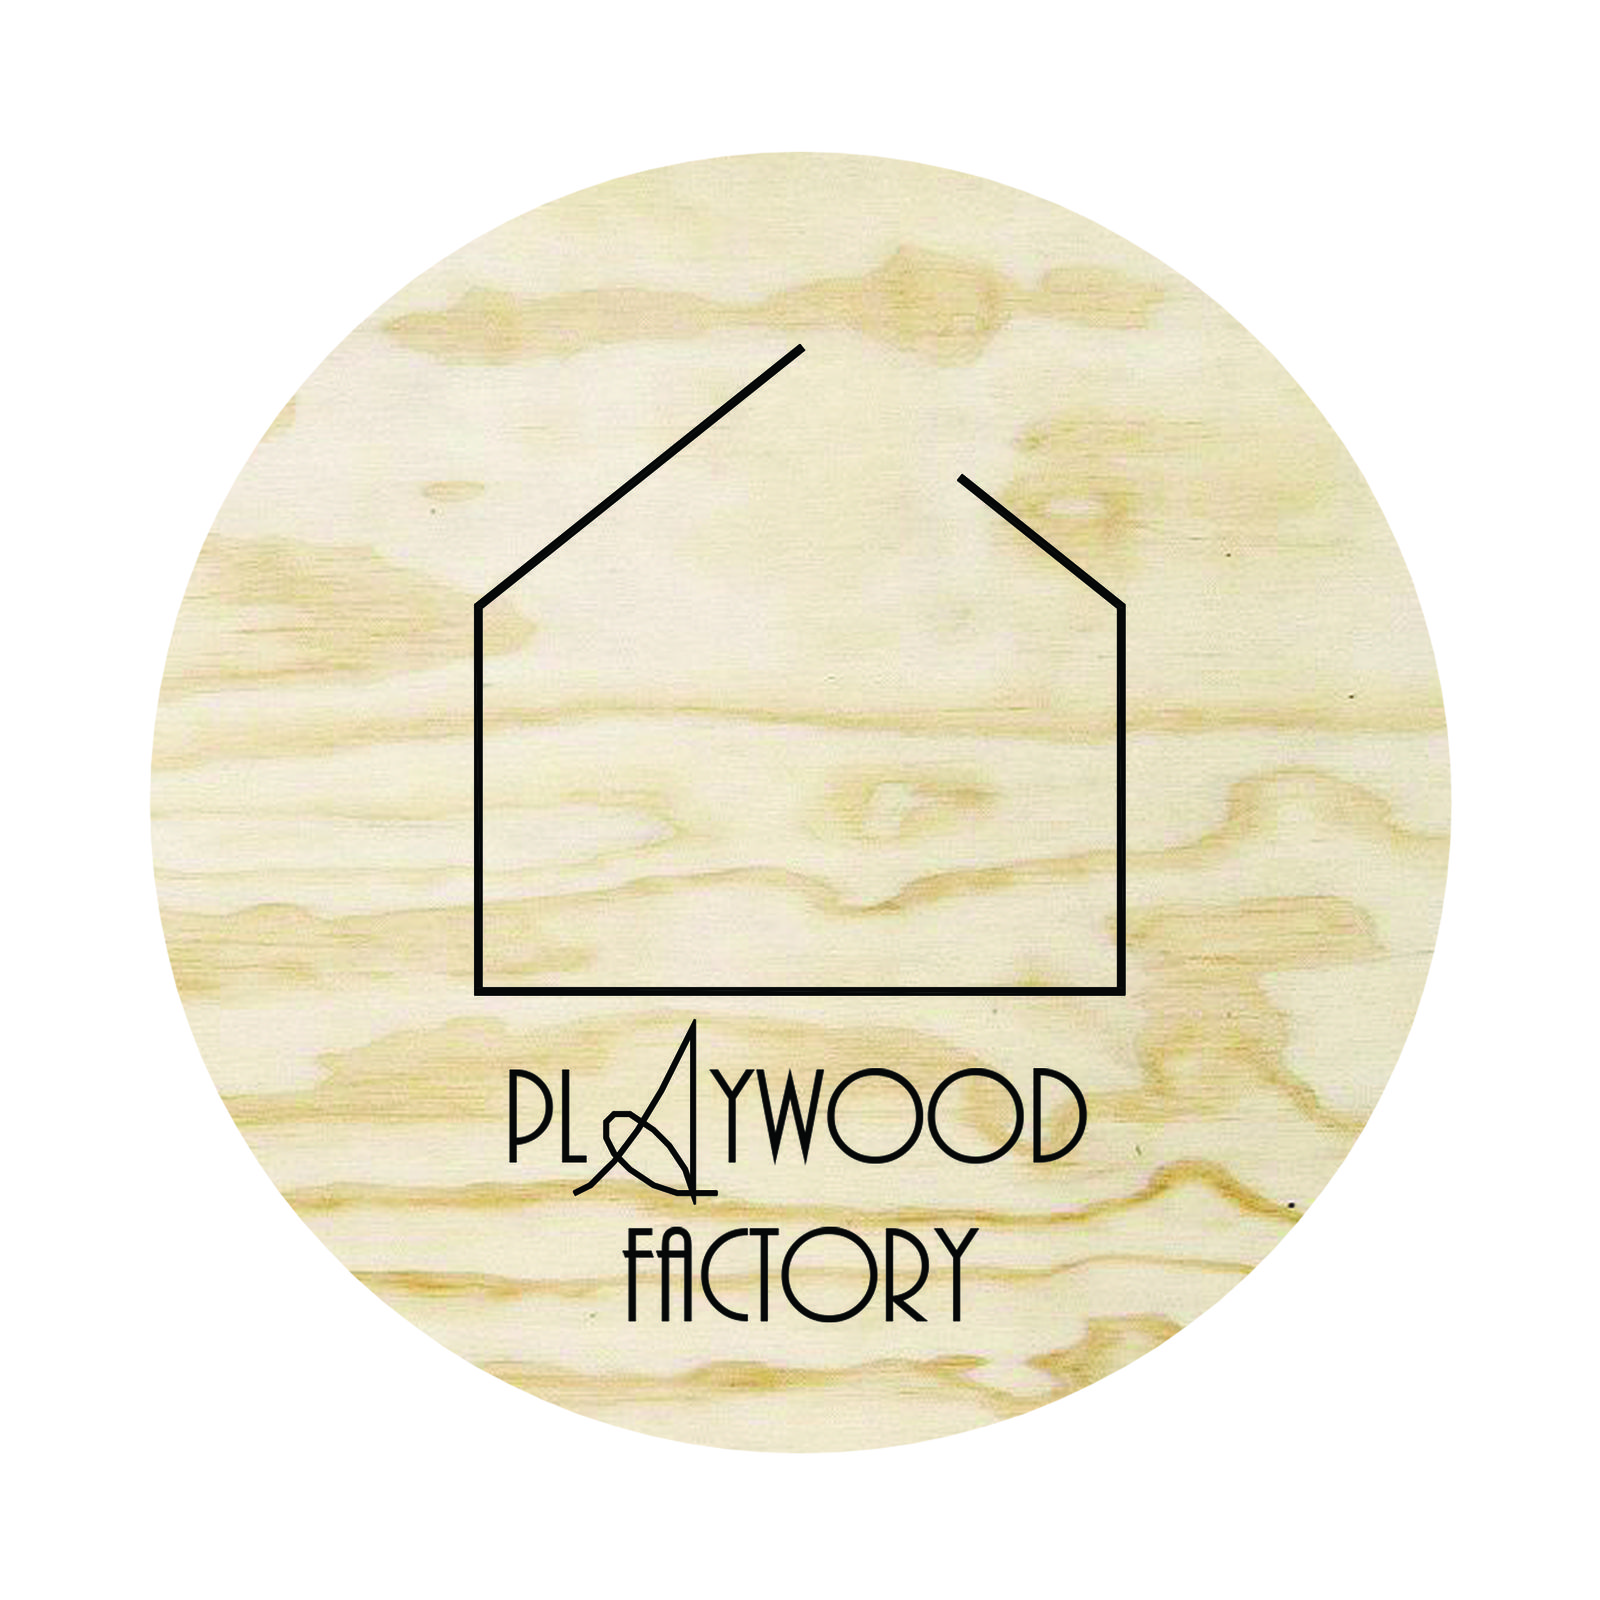 Playwood Factory